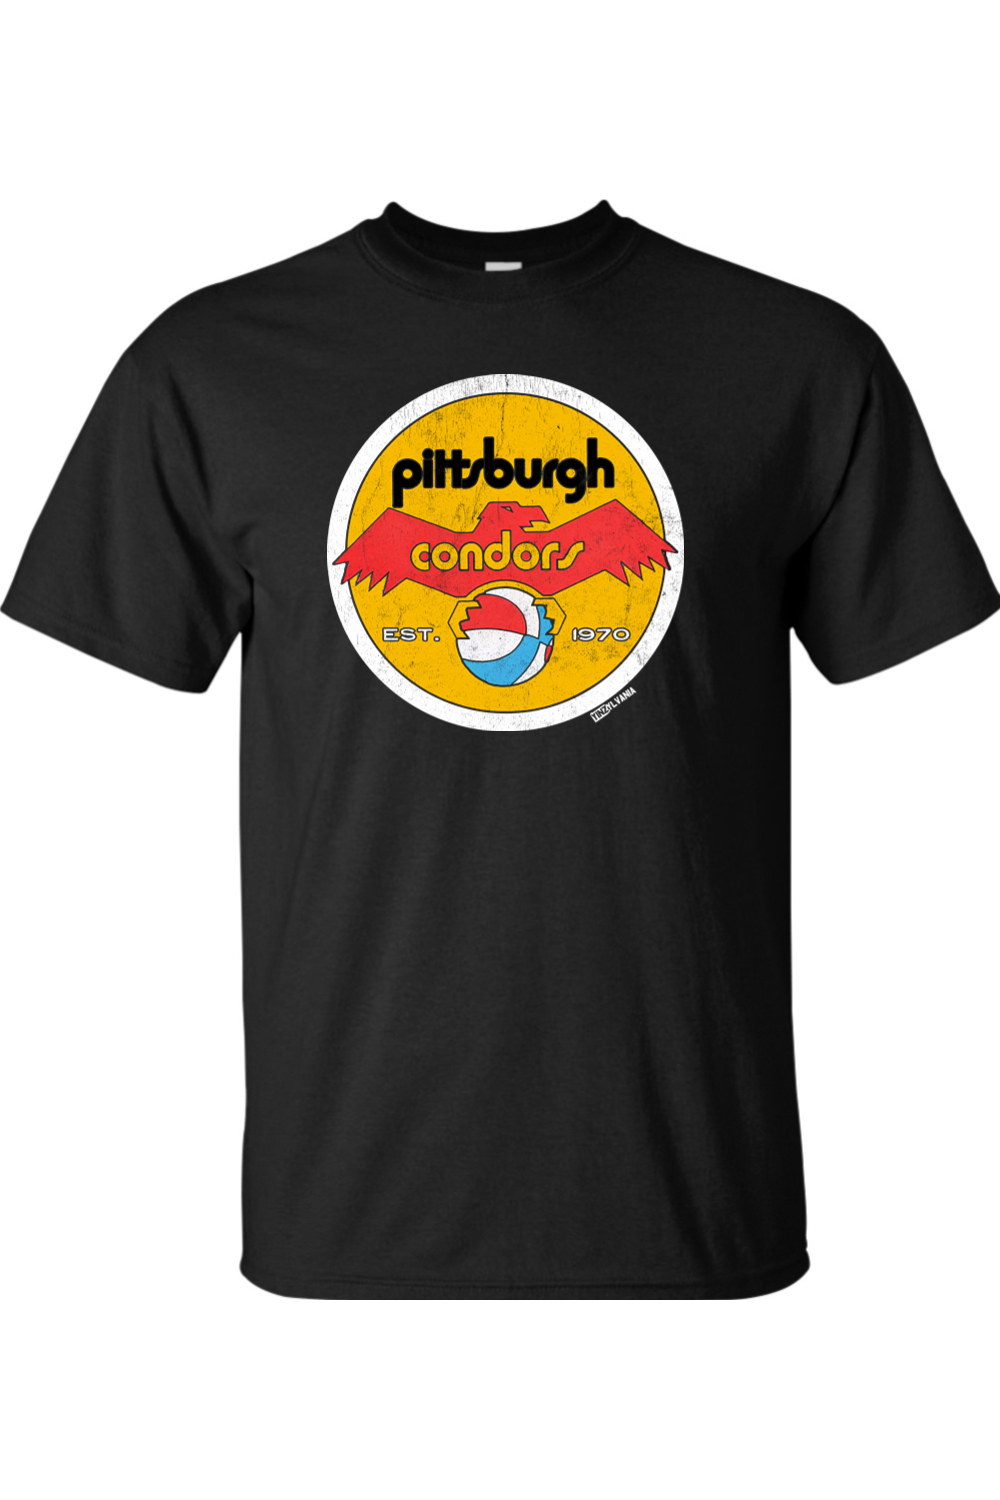 Pittsburgh Condors Basketball (ABA) - 1970 - Big & Tall Tee - Yinzylvania